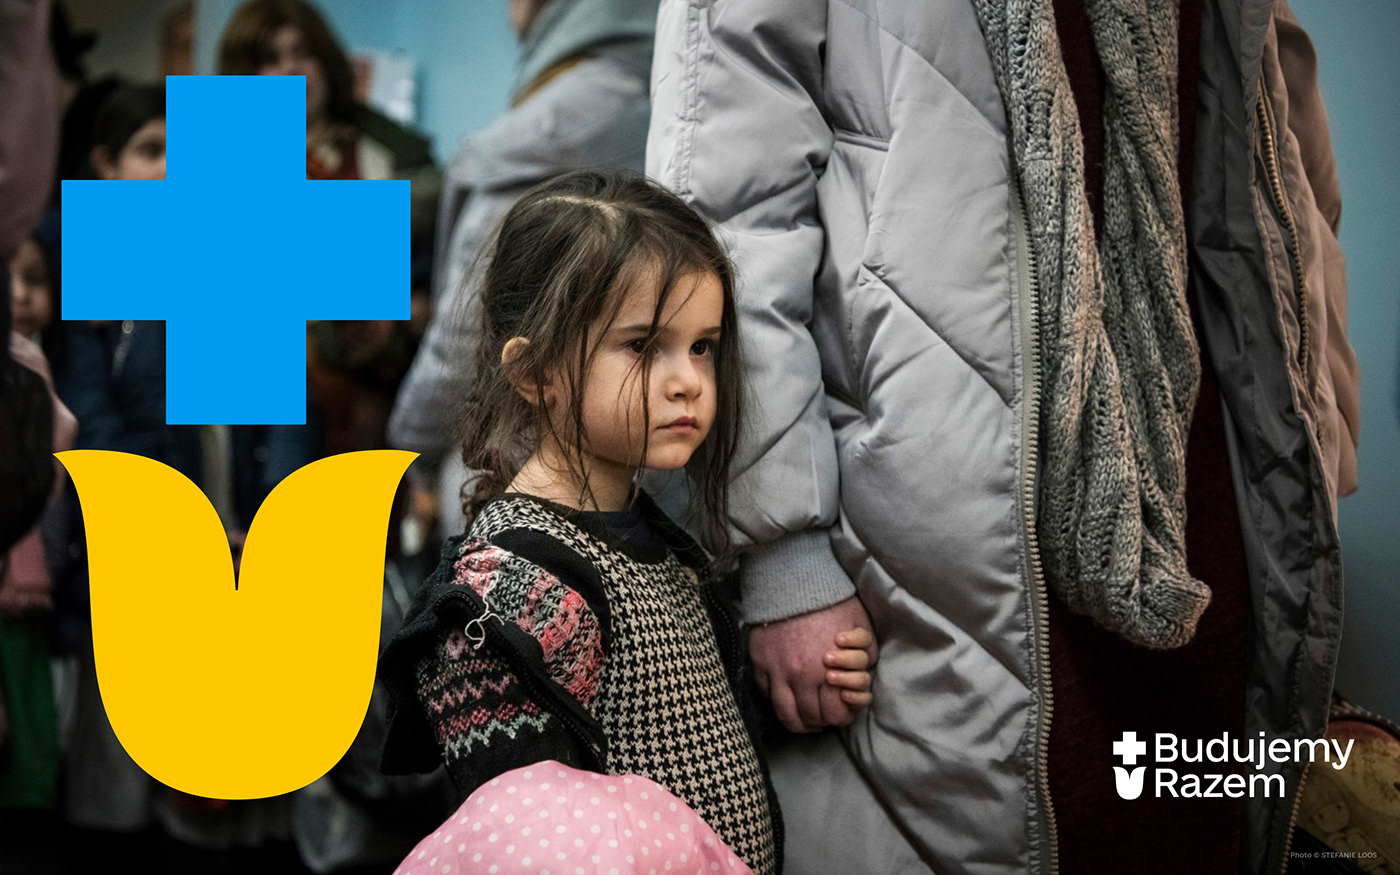 Budujemy razem cross flower ngo logo poland Refugees sign Spizh ukraine War